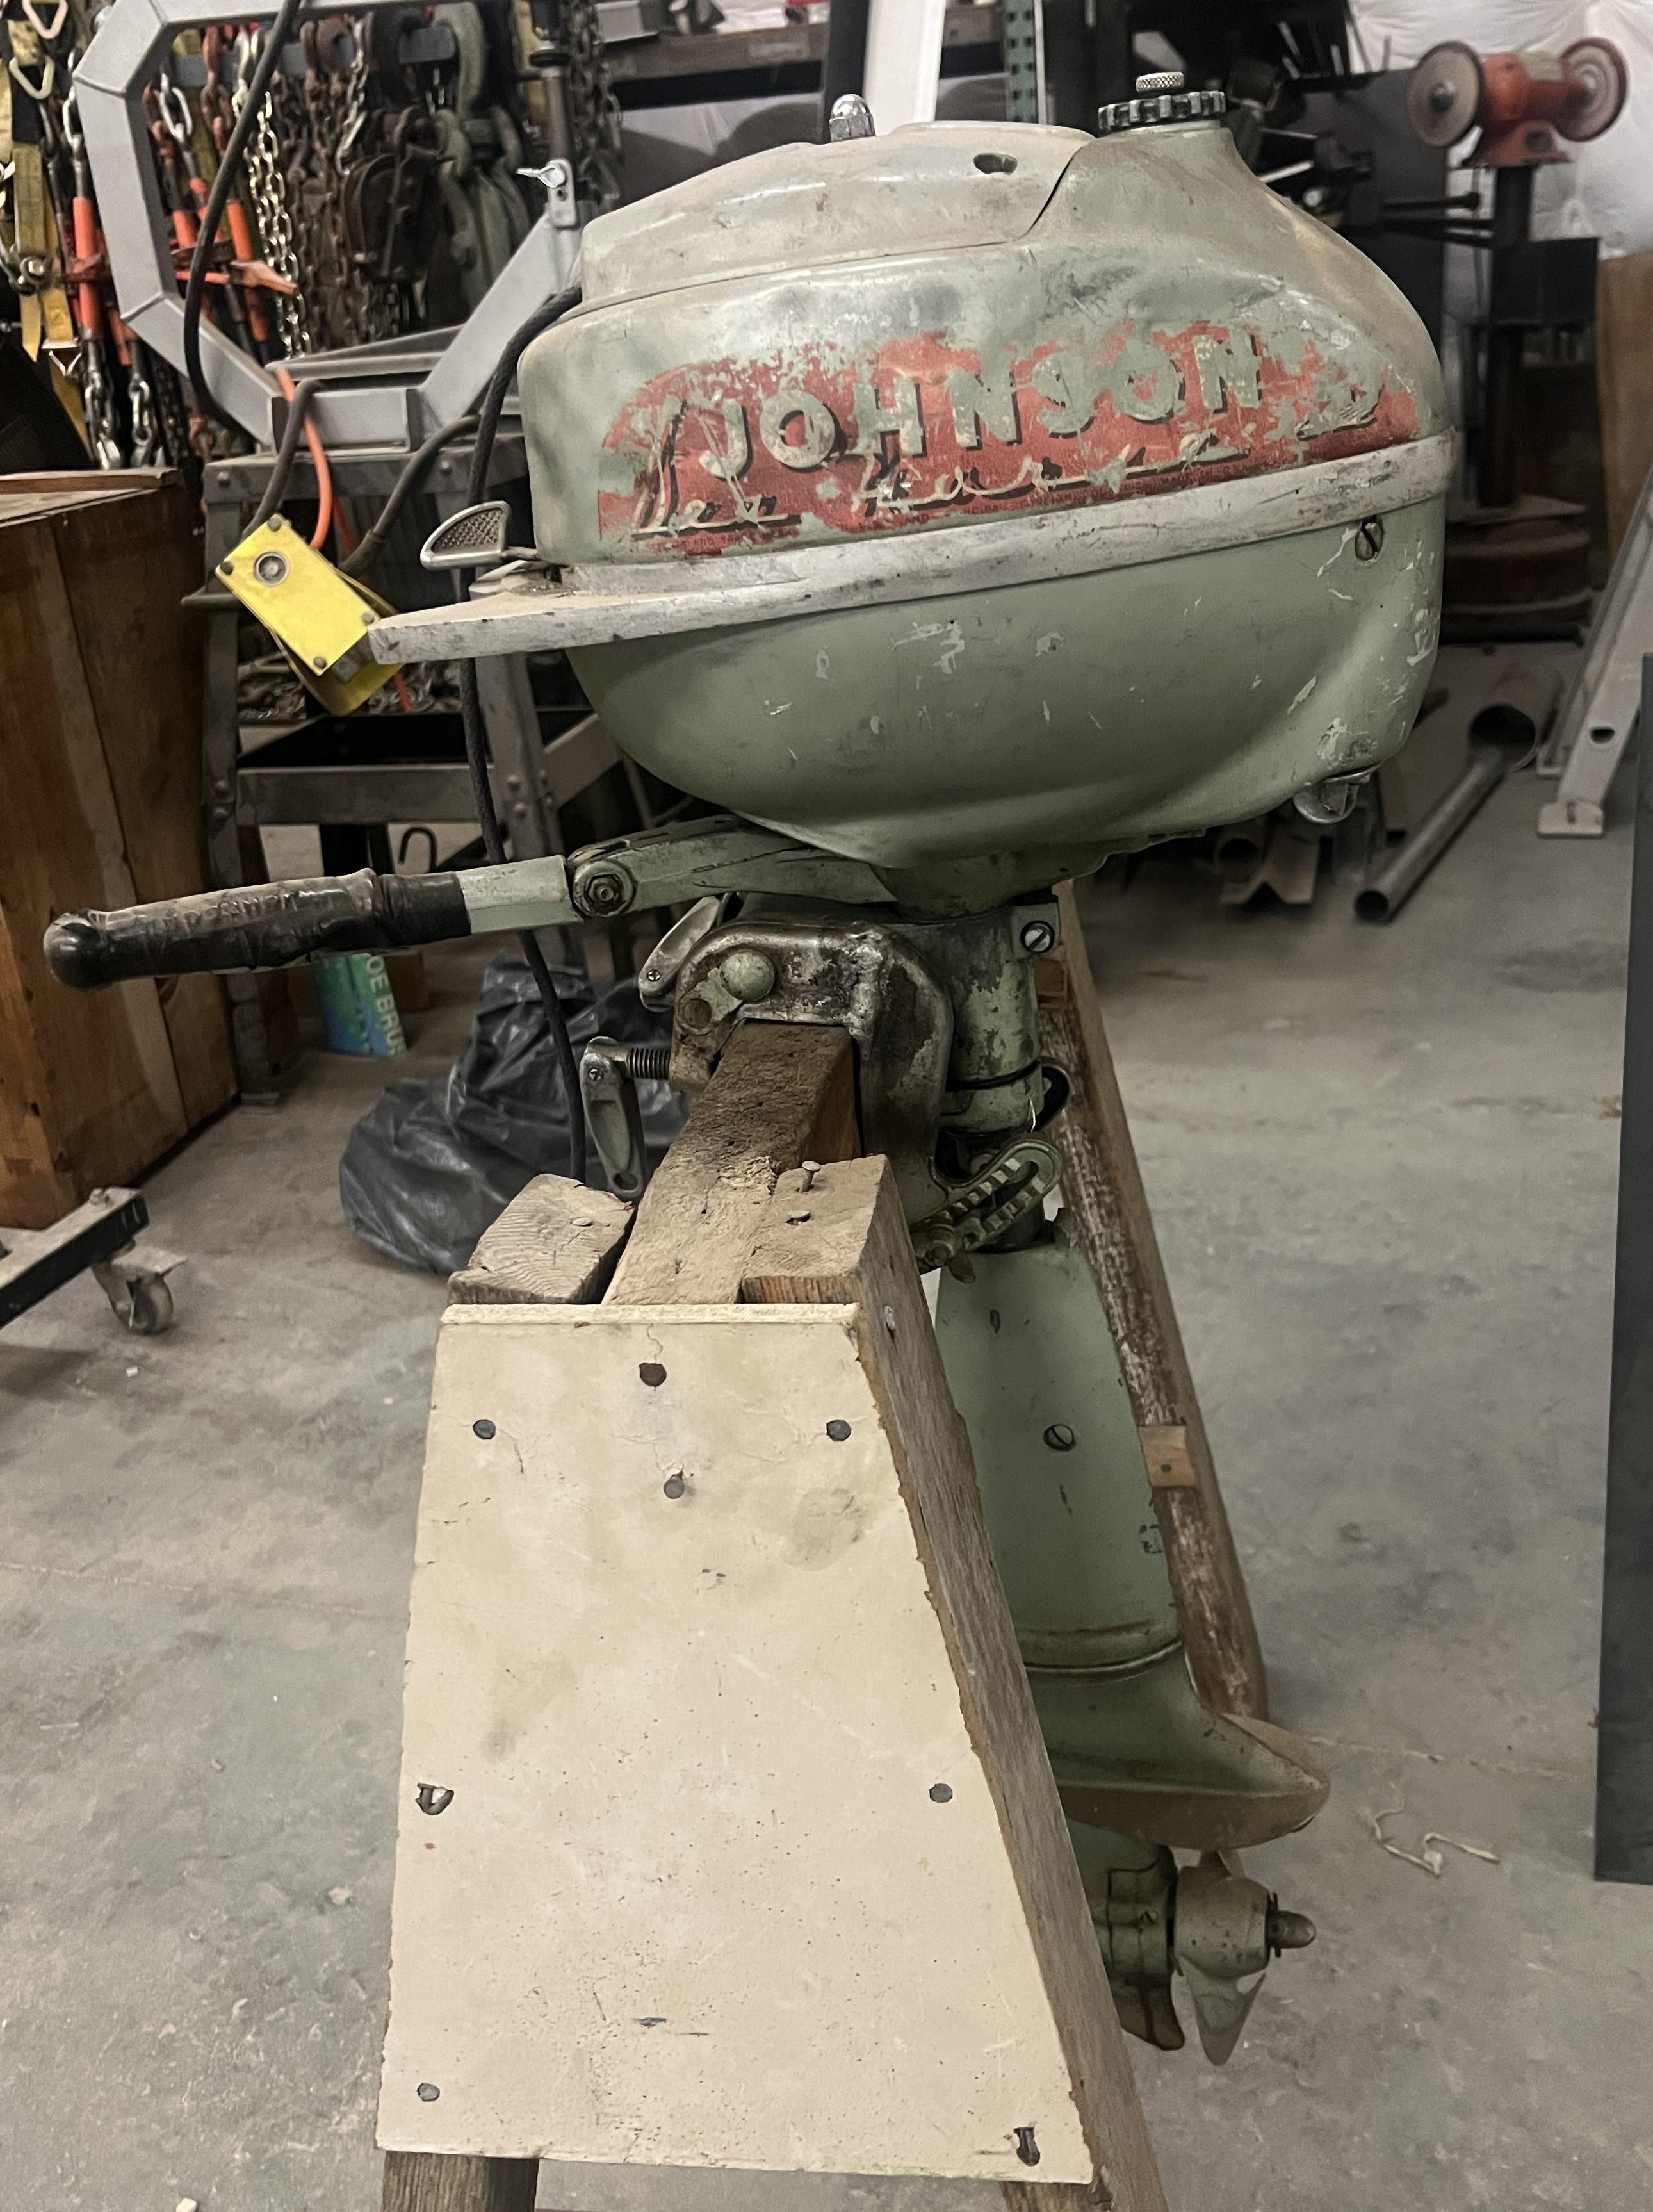 Antique Johnson Outboard Motors